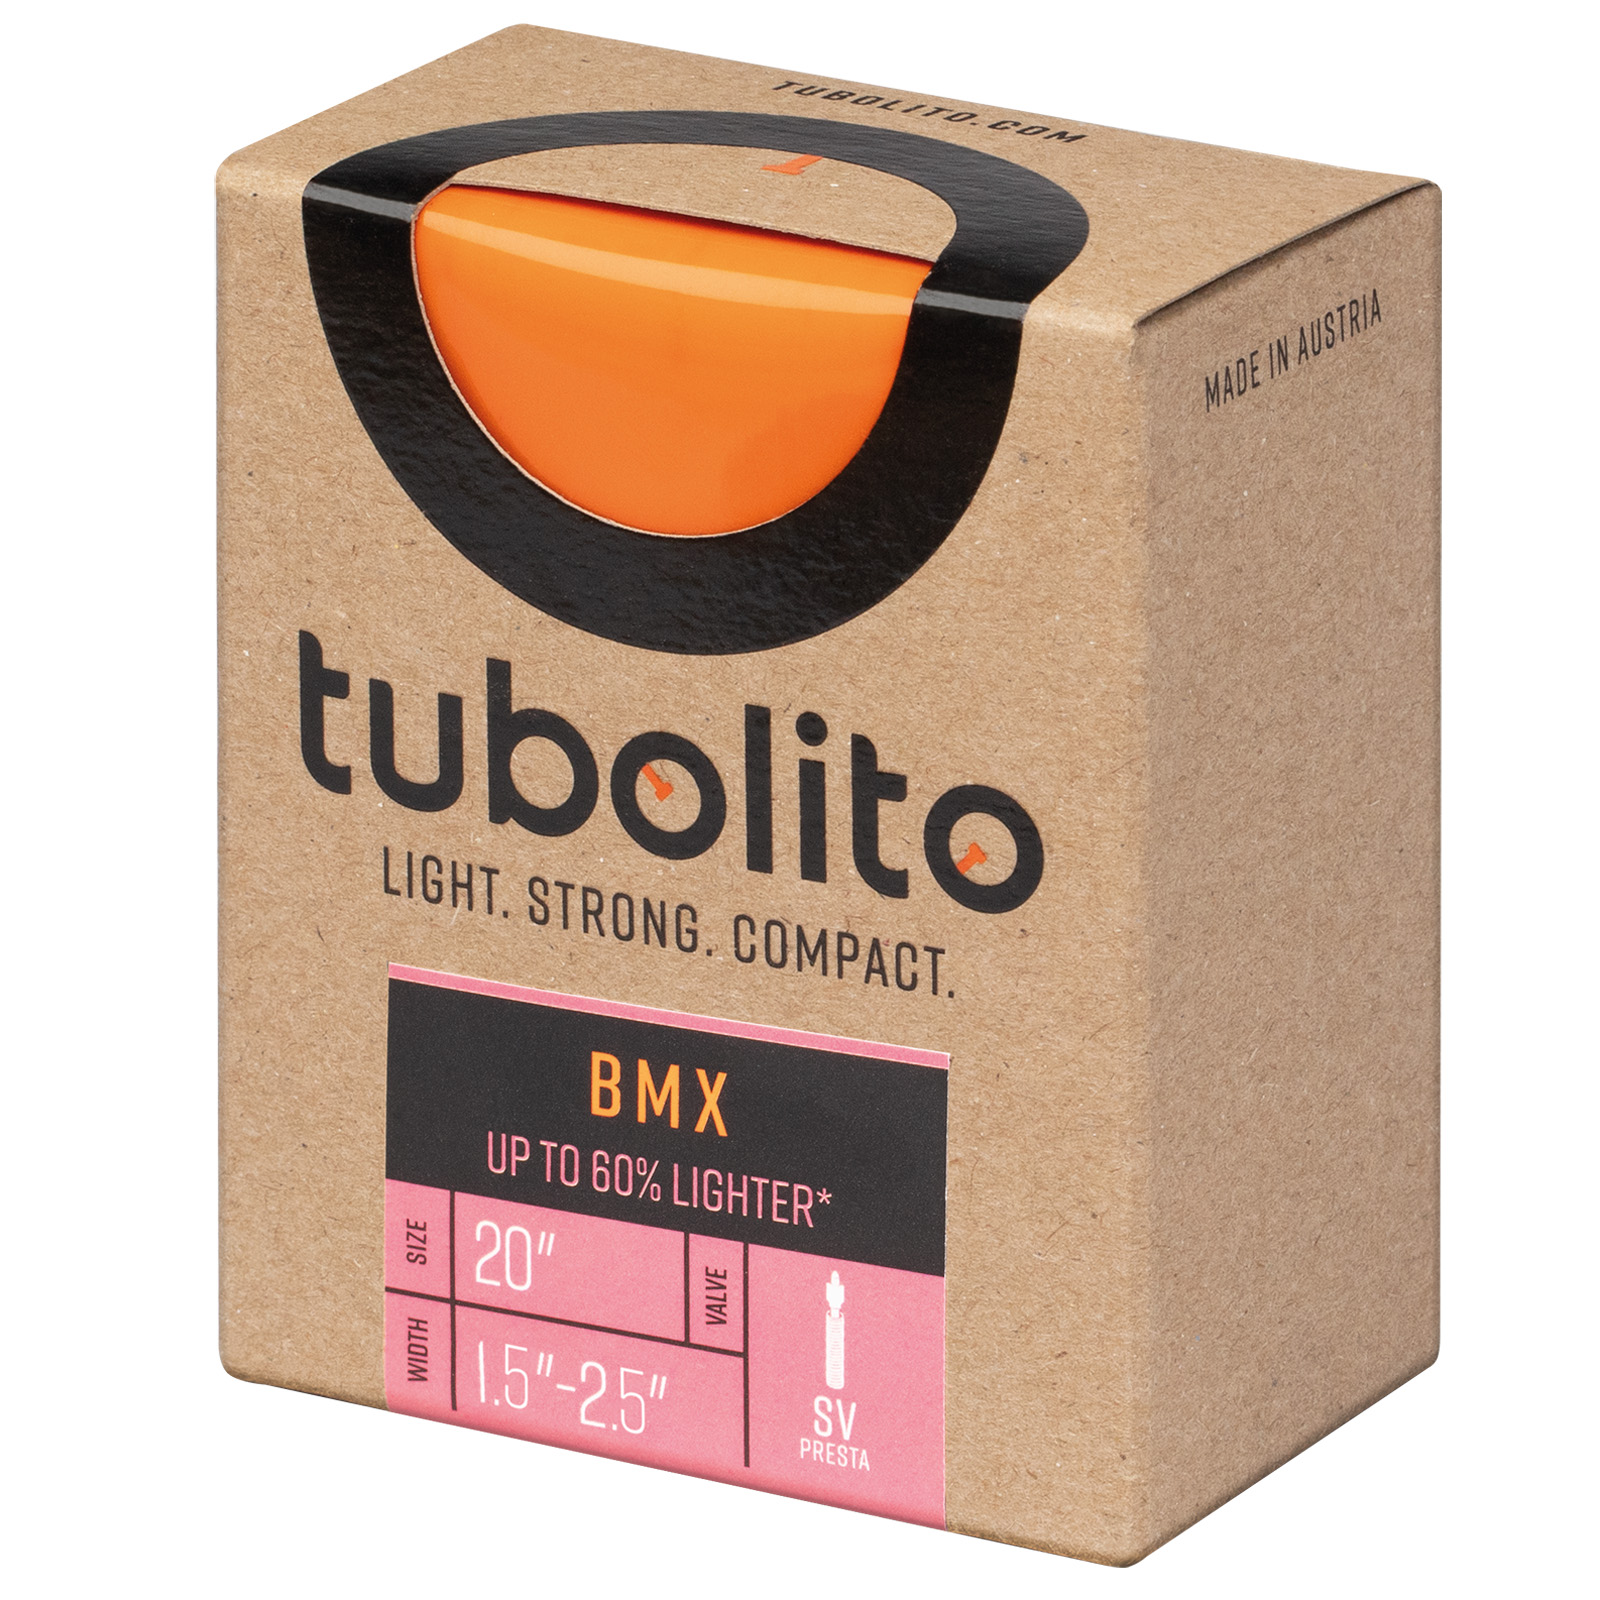 Productfoto van Tubolito Tubo BMX Tube - 20&quot;x1.5-2.5&quot; - Presta Valve